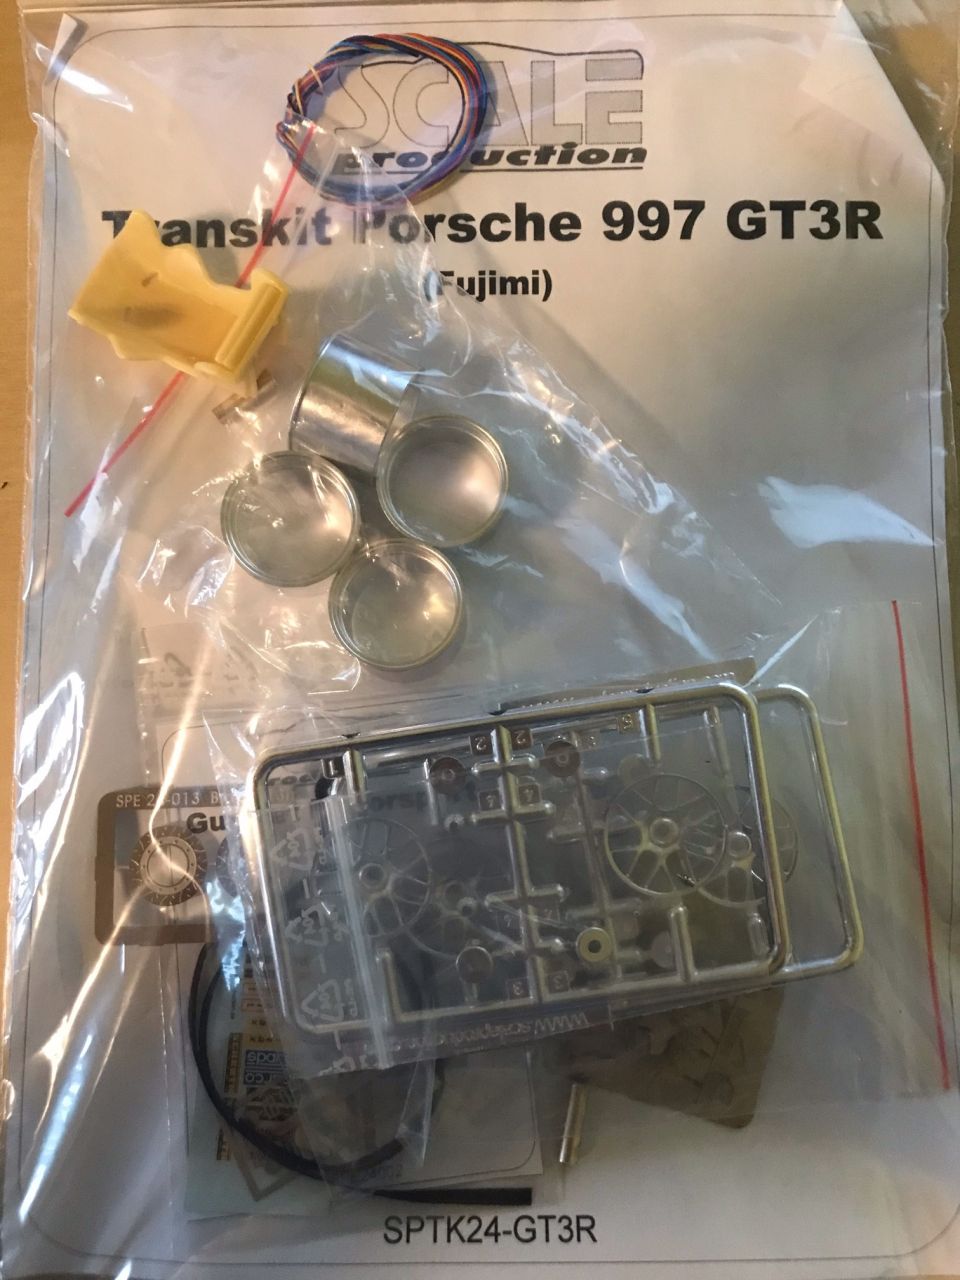 Scale Production SPTK24-GT3R Transkit Porsche 997 GT3R for Fujimi Porsche 911 GT3R